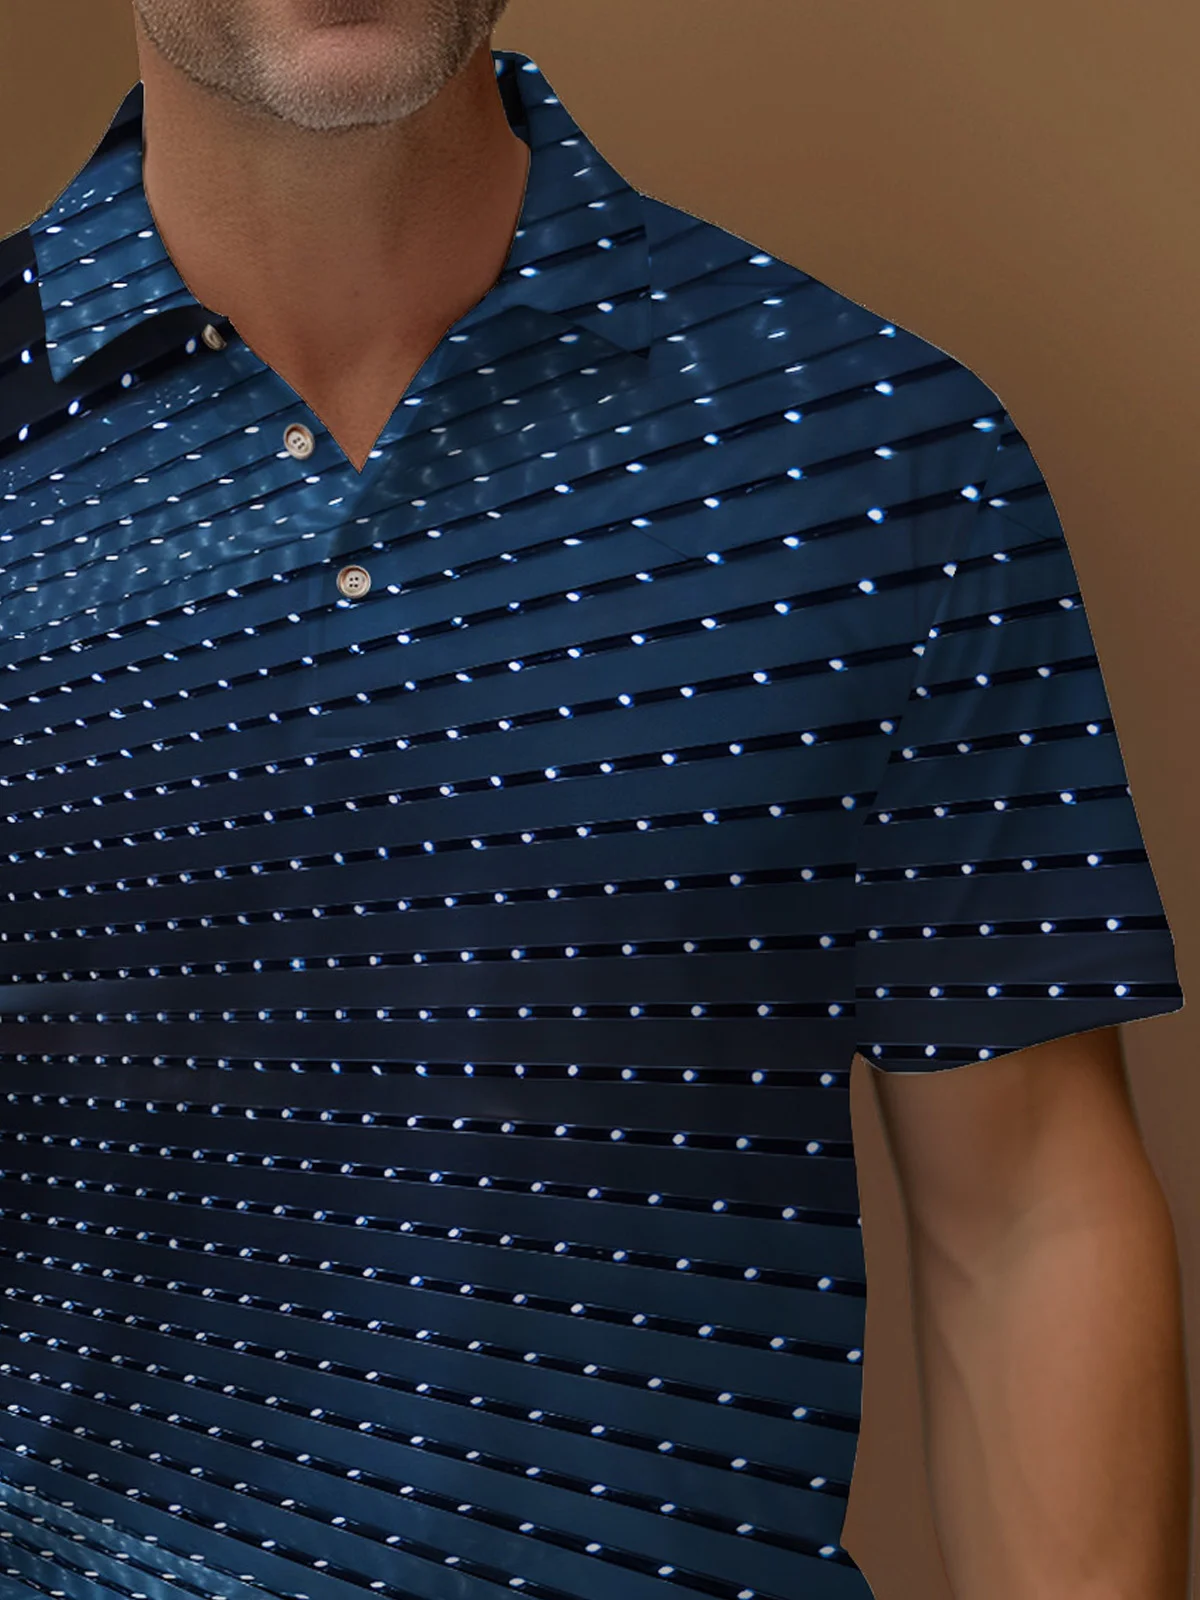 Royaura® Retro Textured Men's Polo Shirt Stretch Comfort Basic Short Sleeve Polo Shirt Big Tall